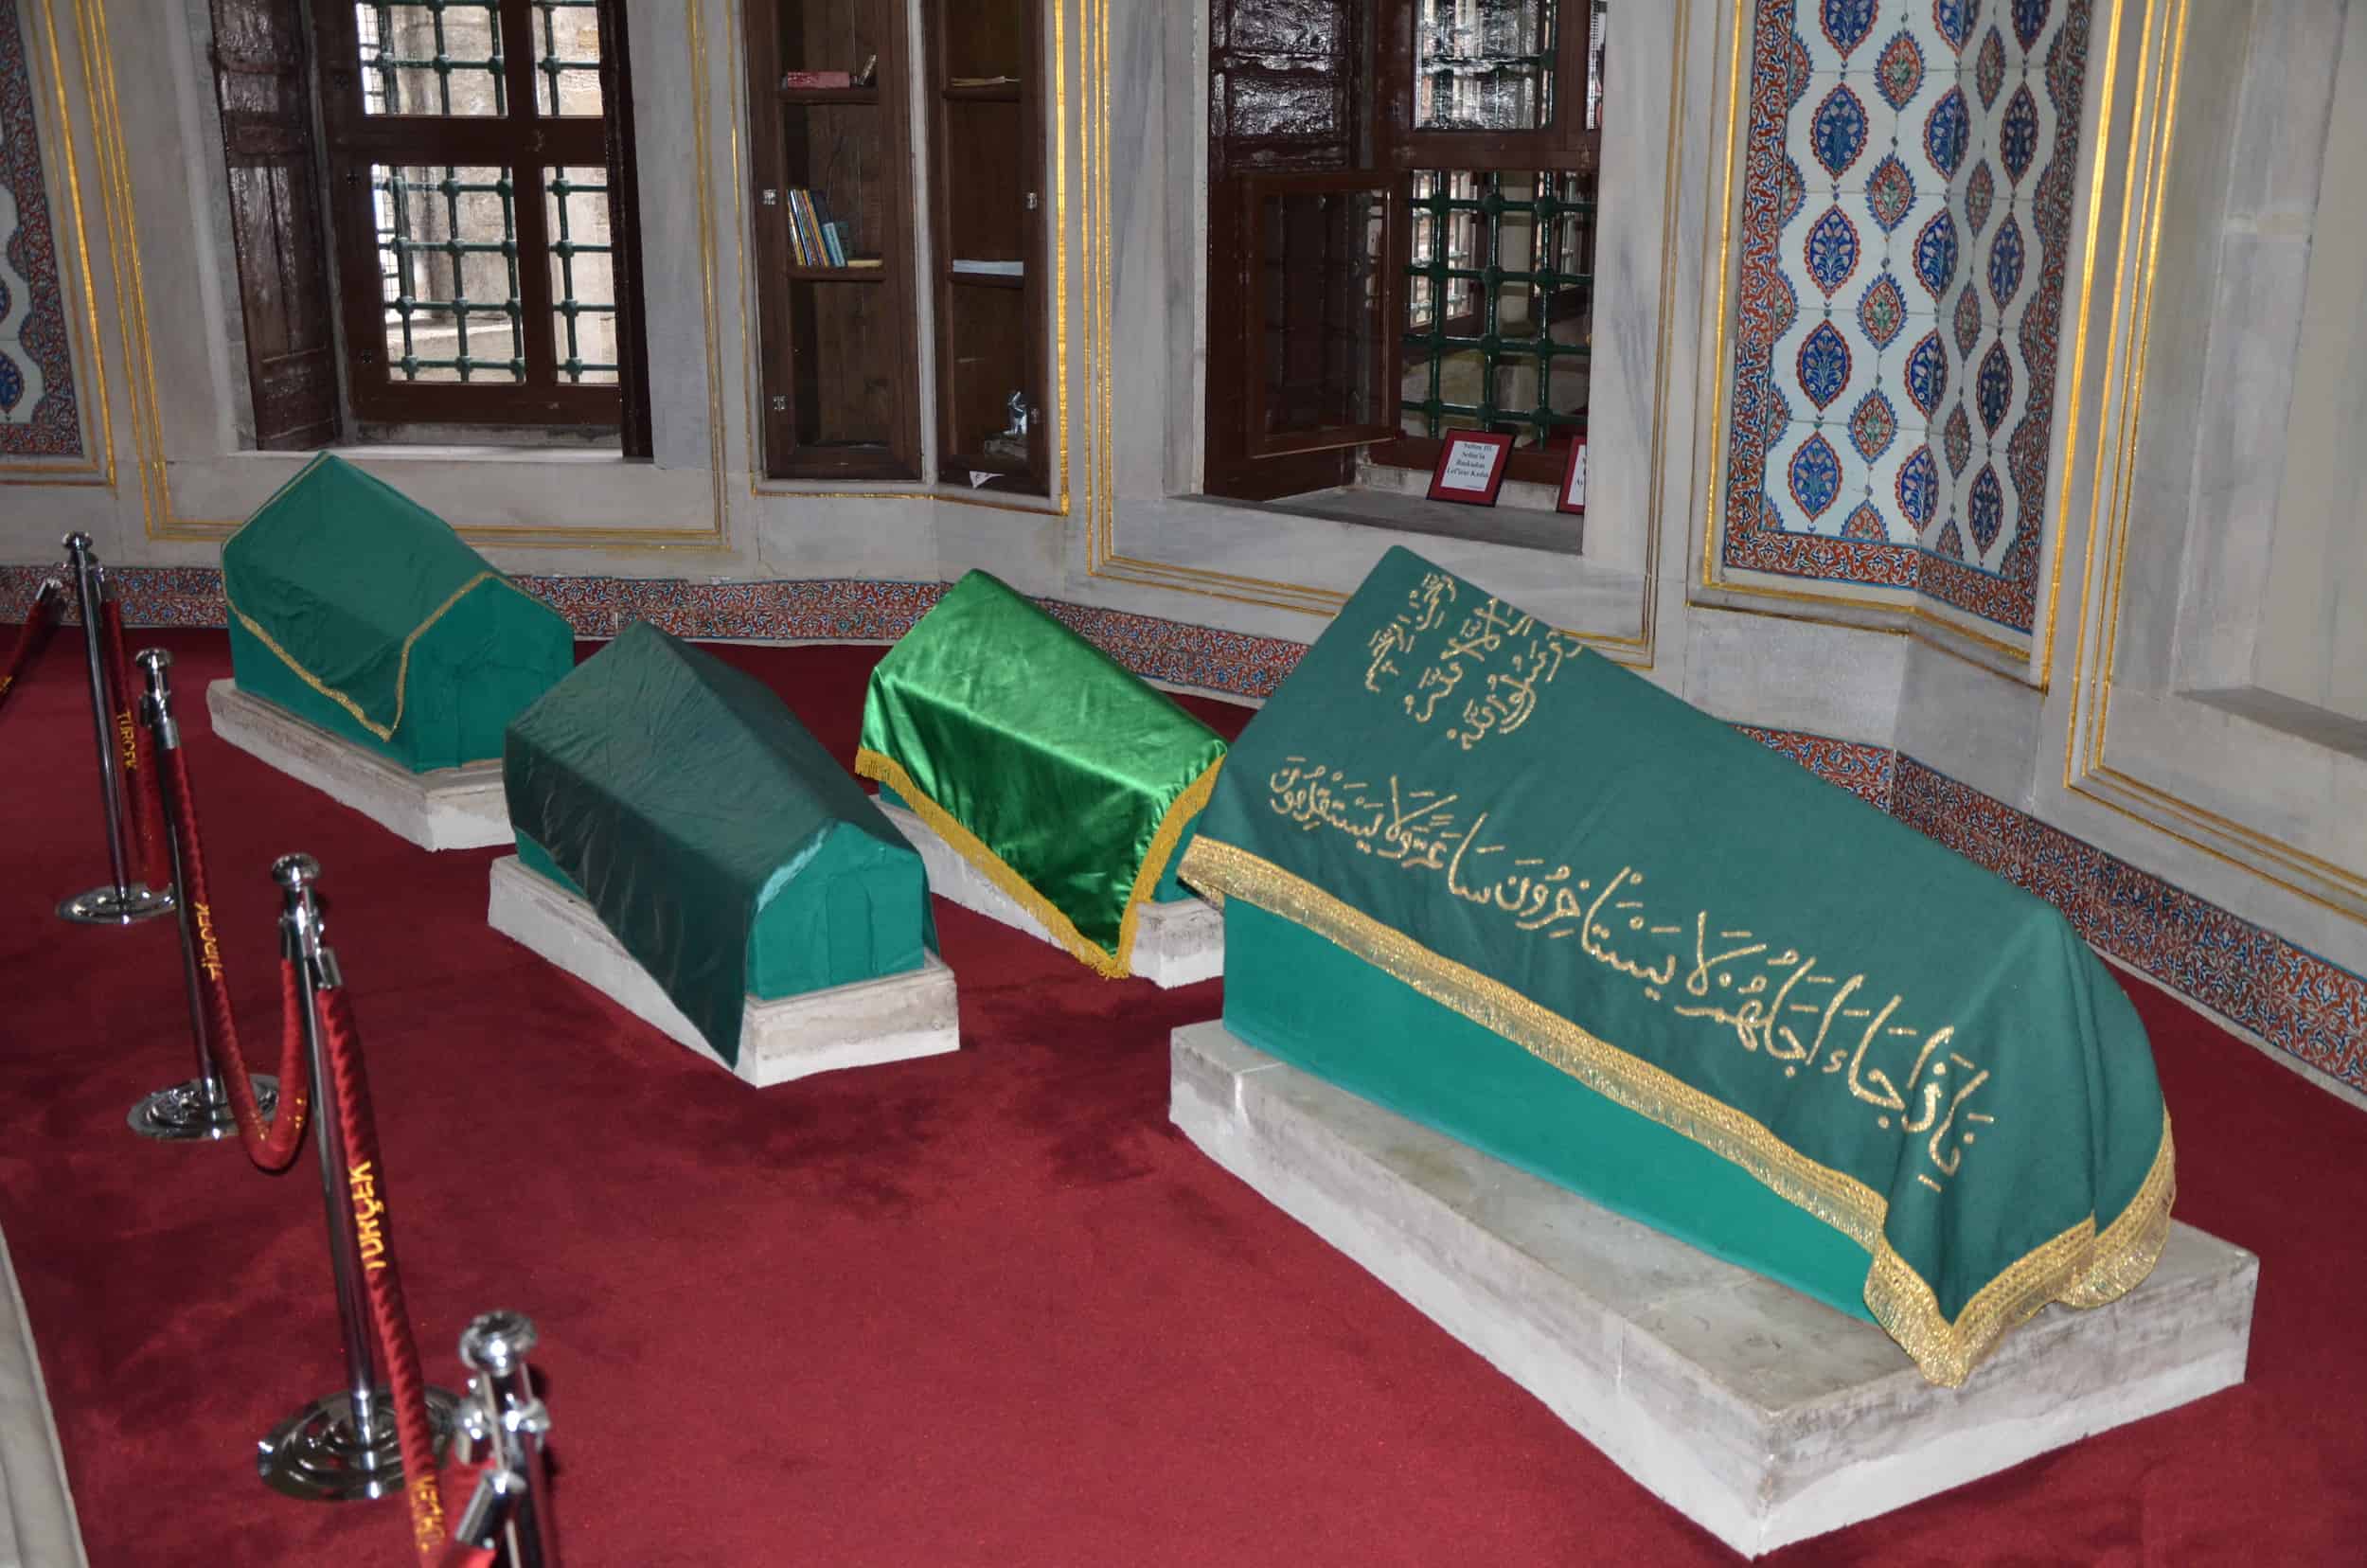 Other burials in the Tomb of Mustafa III